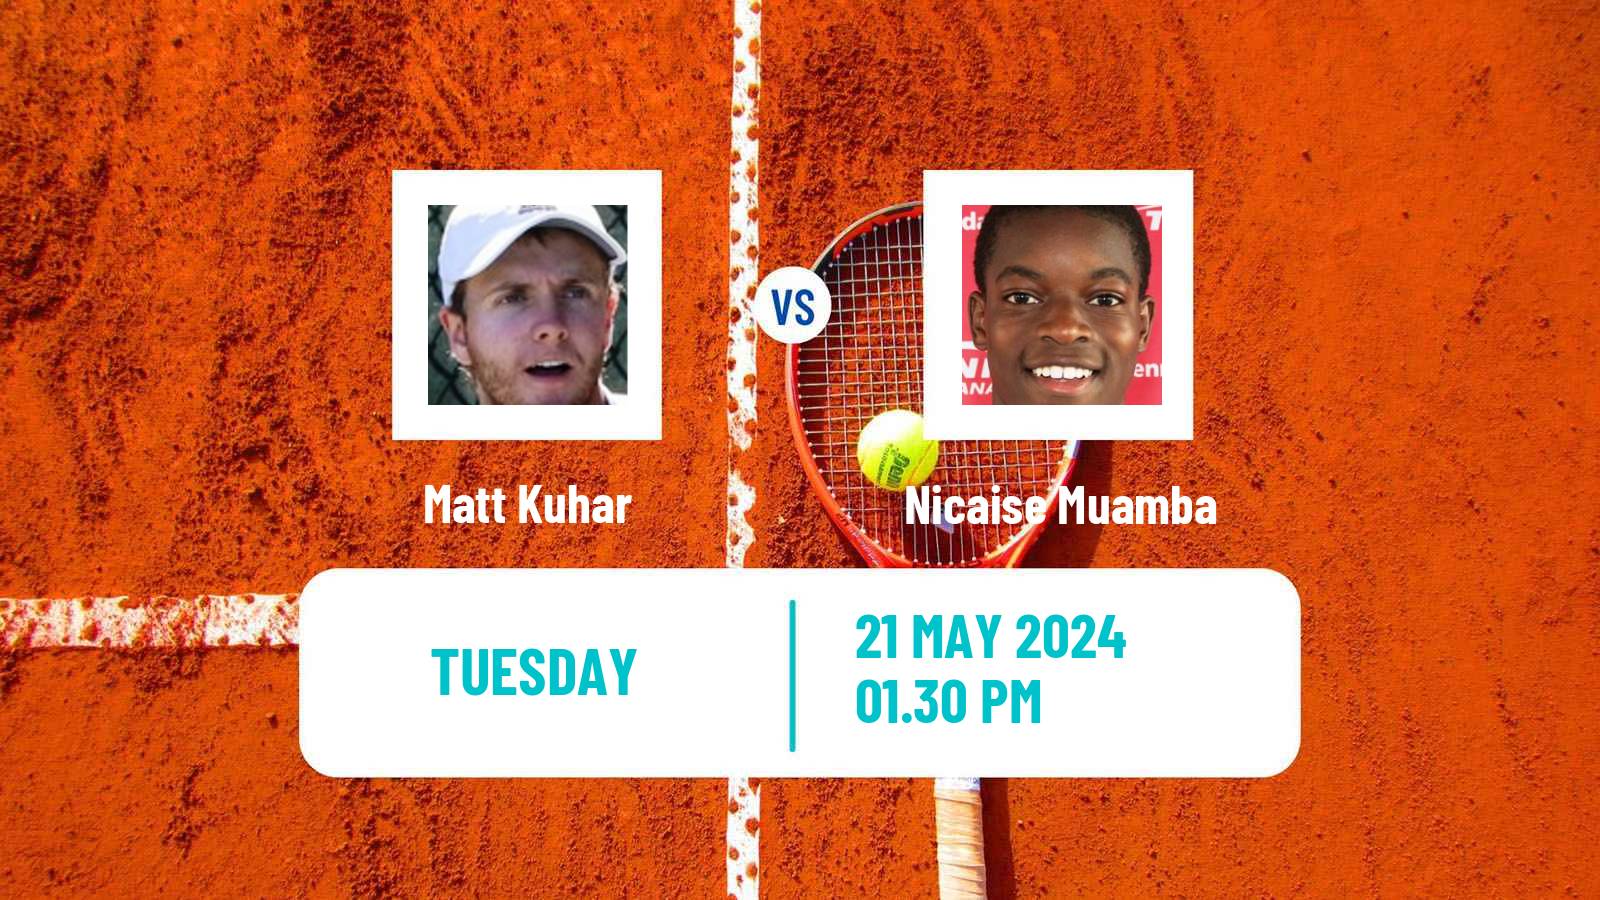 Tennis ITF M15 Kingston 2 Men Matt Kuhar - Nicaise Muamba